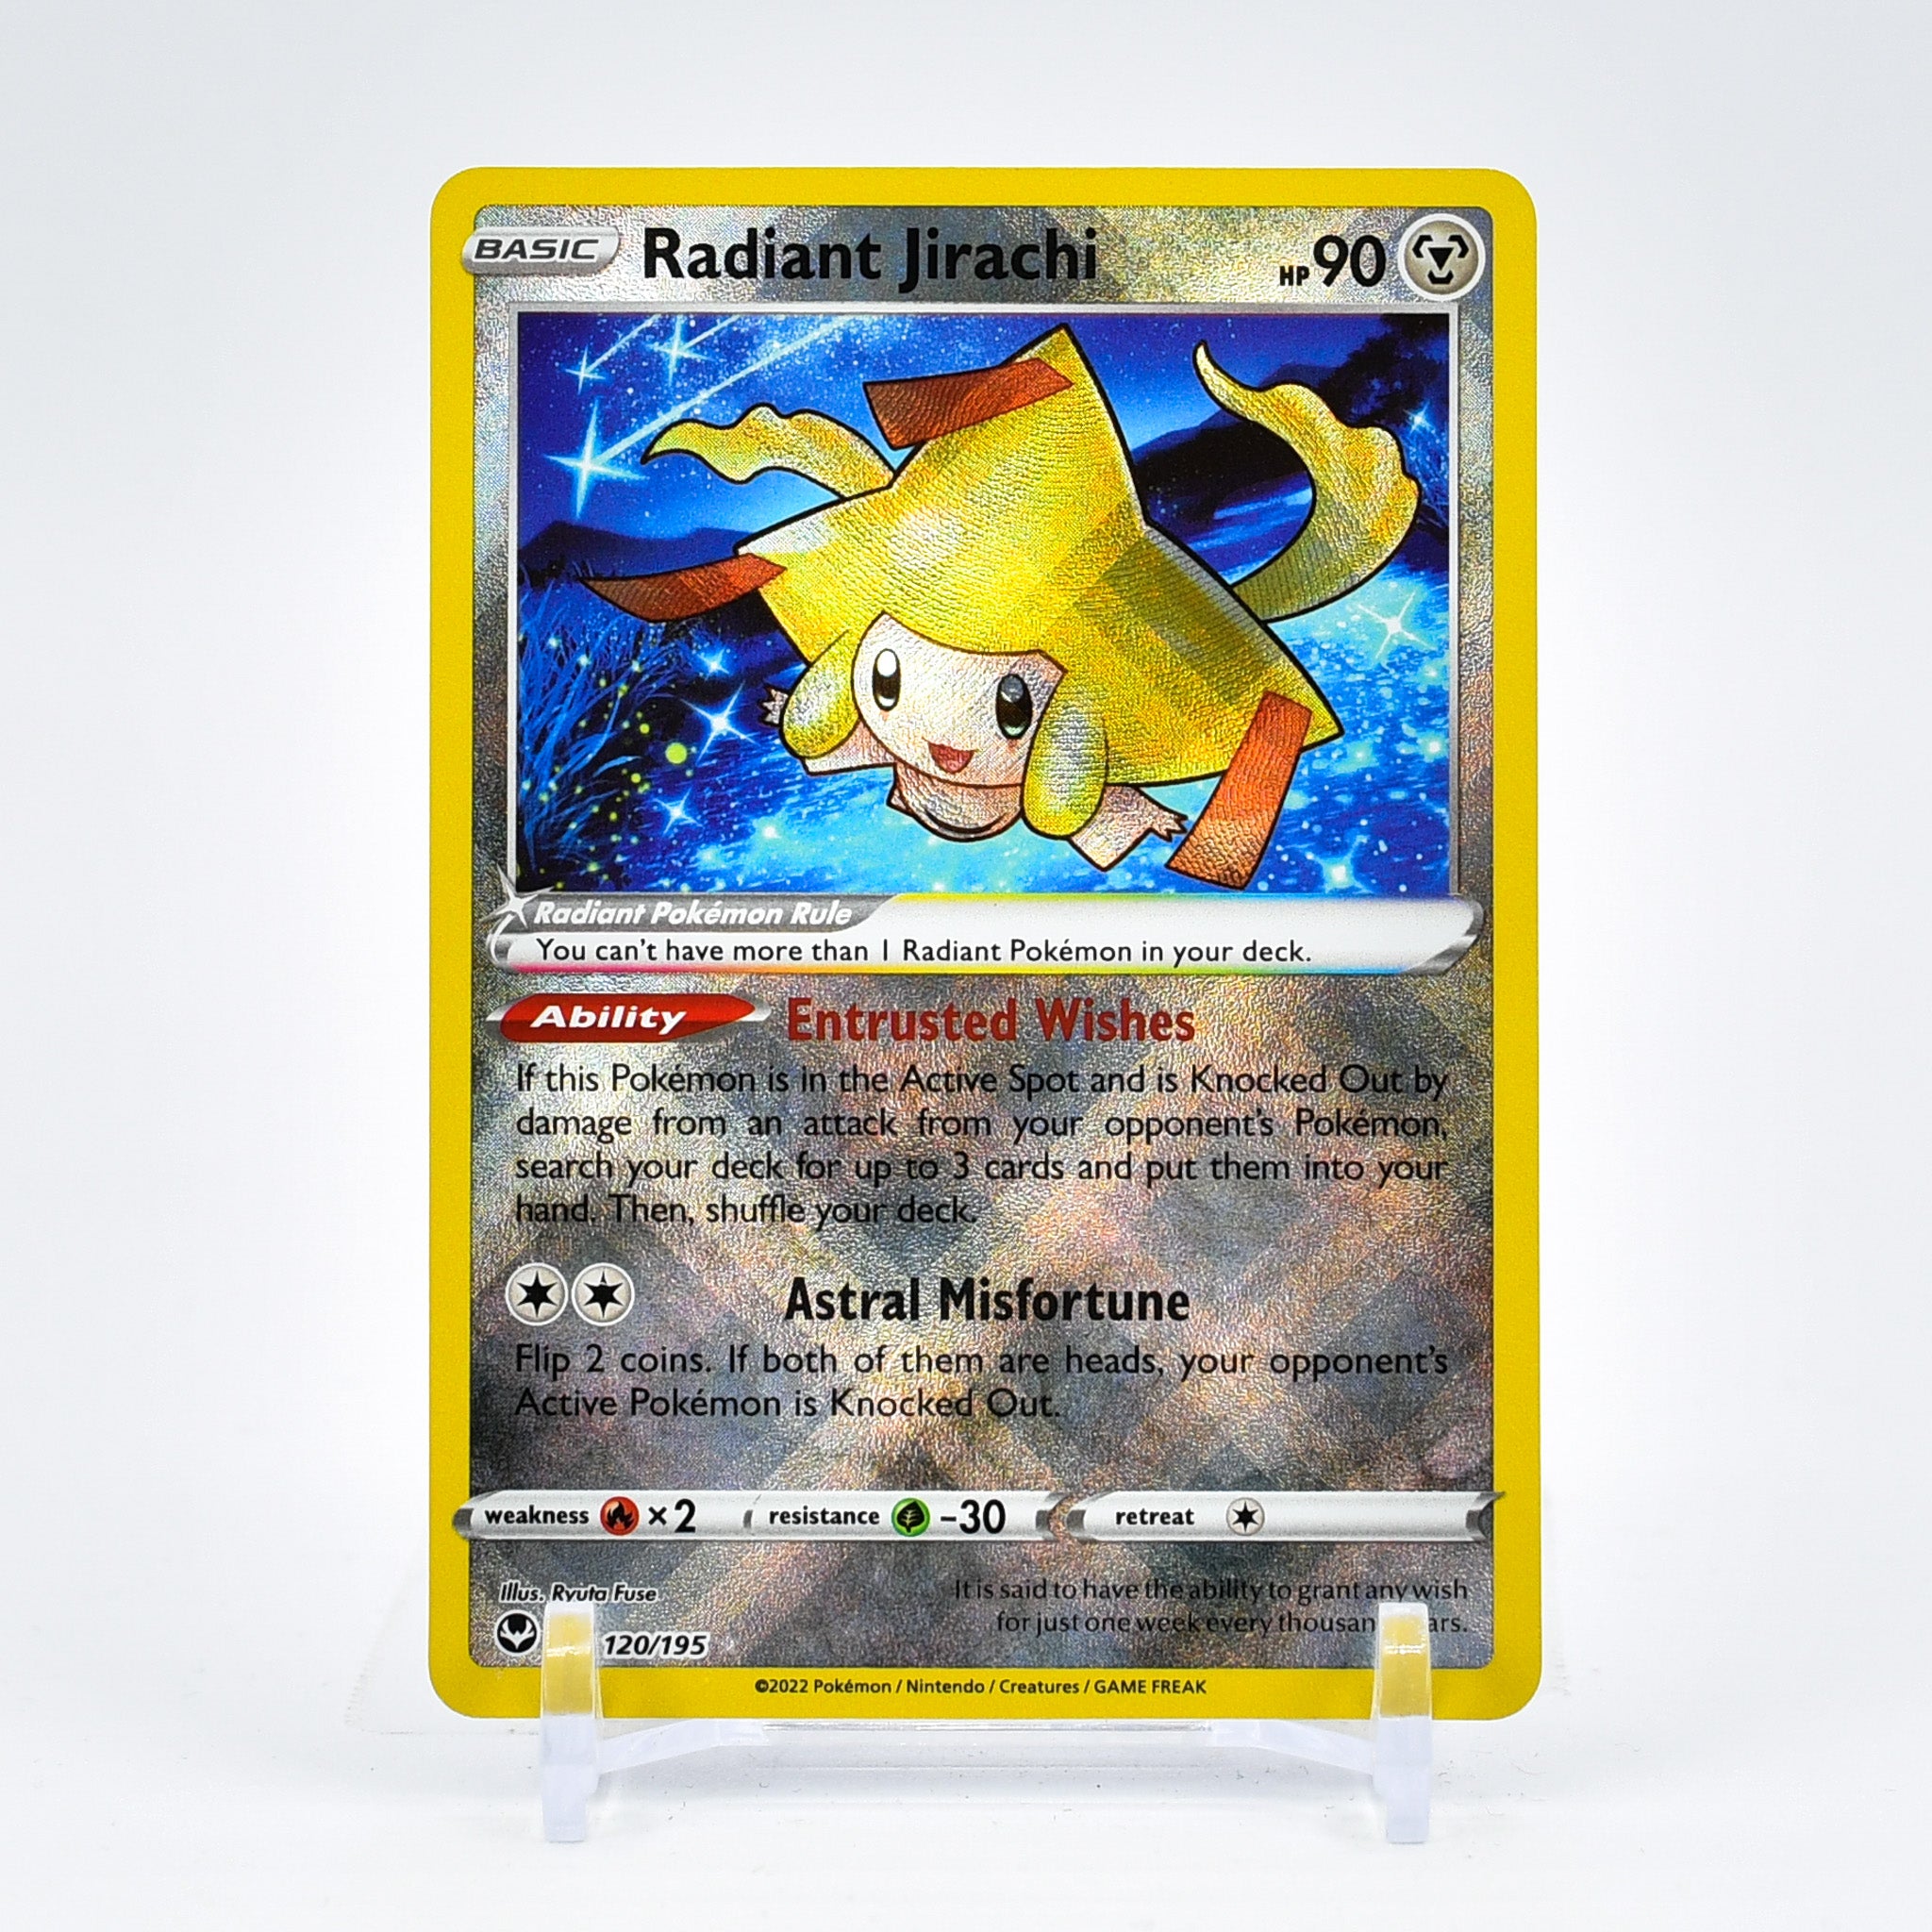 Radiant Jirachi - 120/195 Silver Tempest SHINY Holo Rare Pokemon - NM/MINT